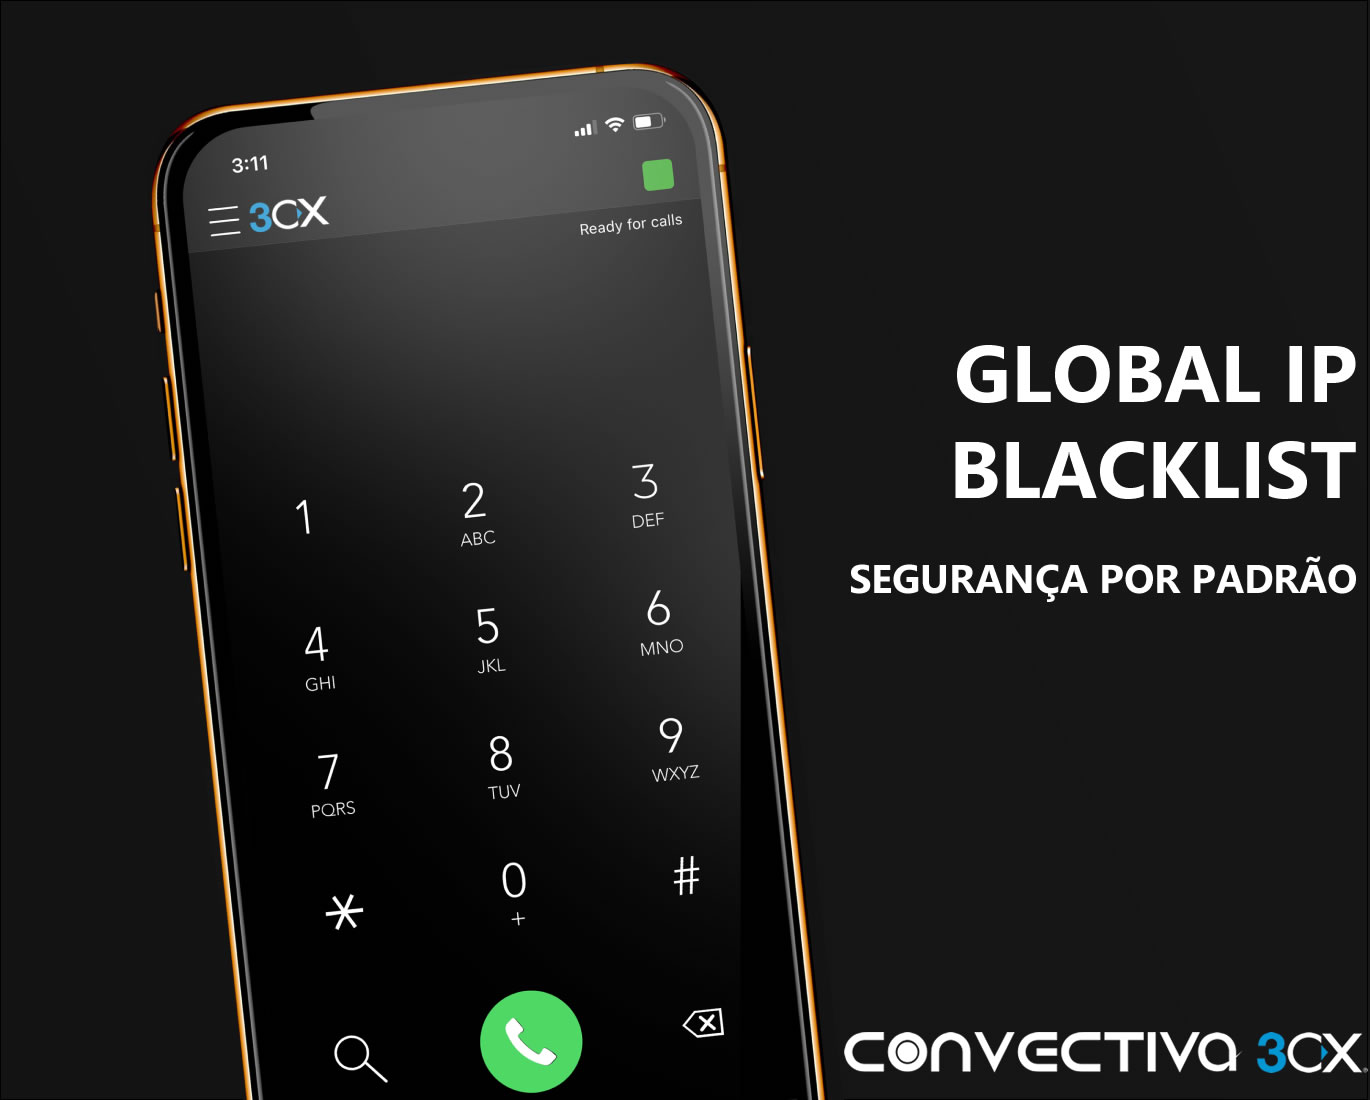 3CX: Global IP Blacklist - Segurança por padrão